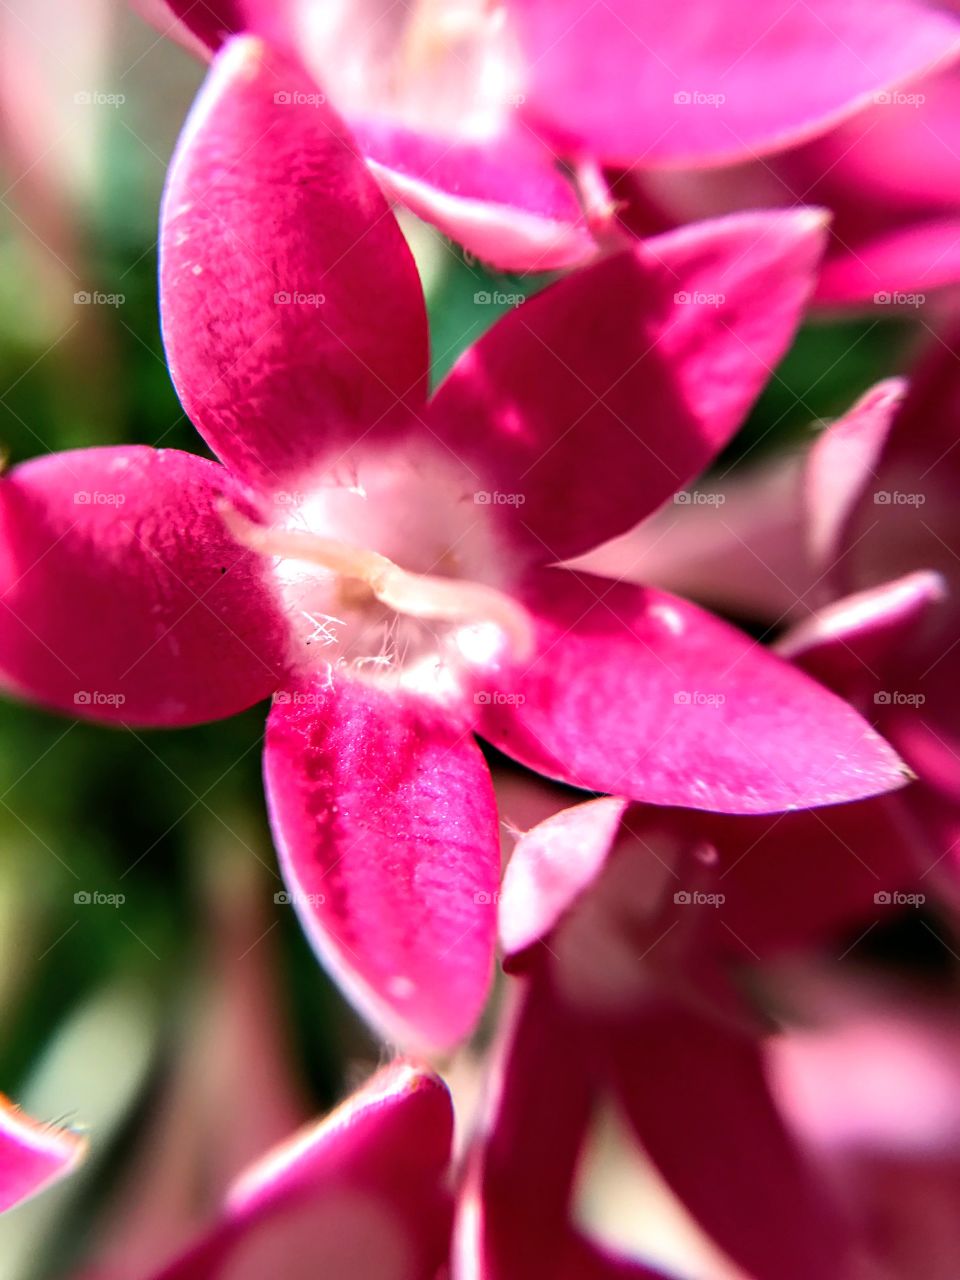 Fuchsia Penta Flower - detail